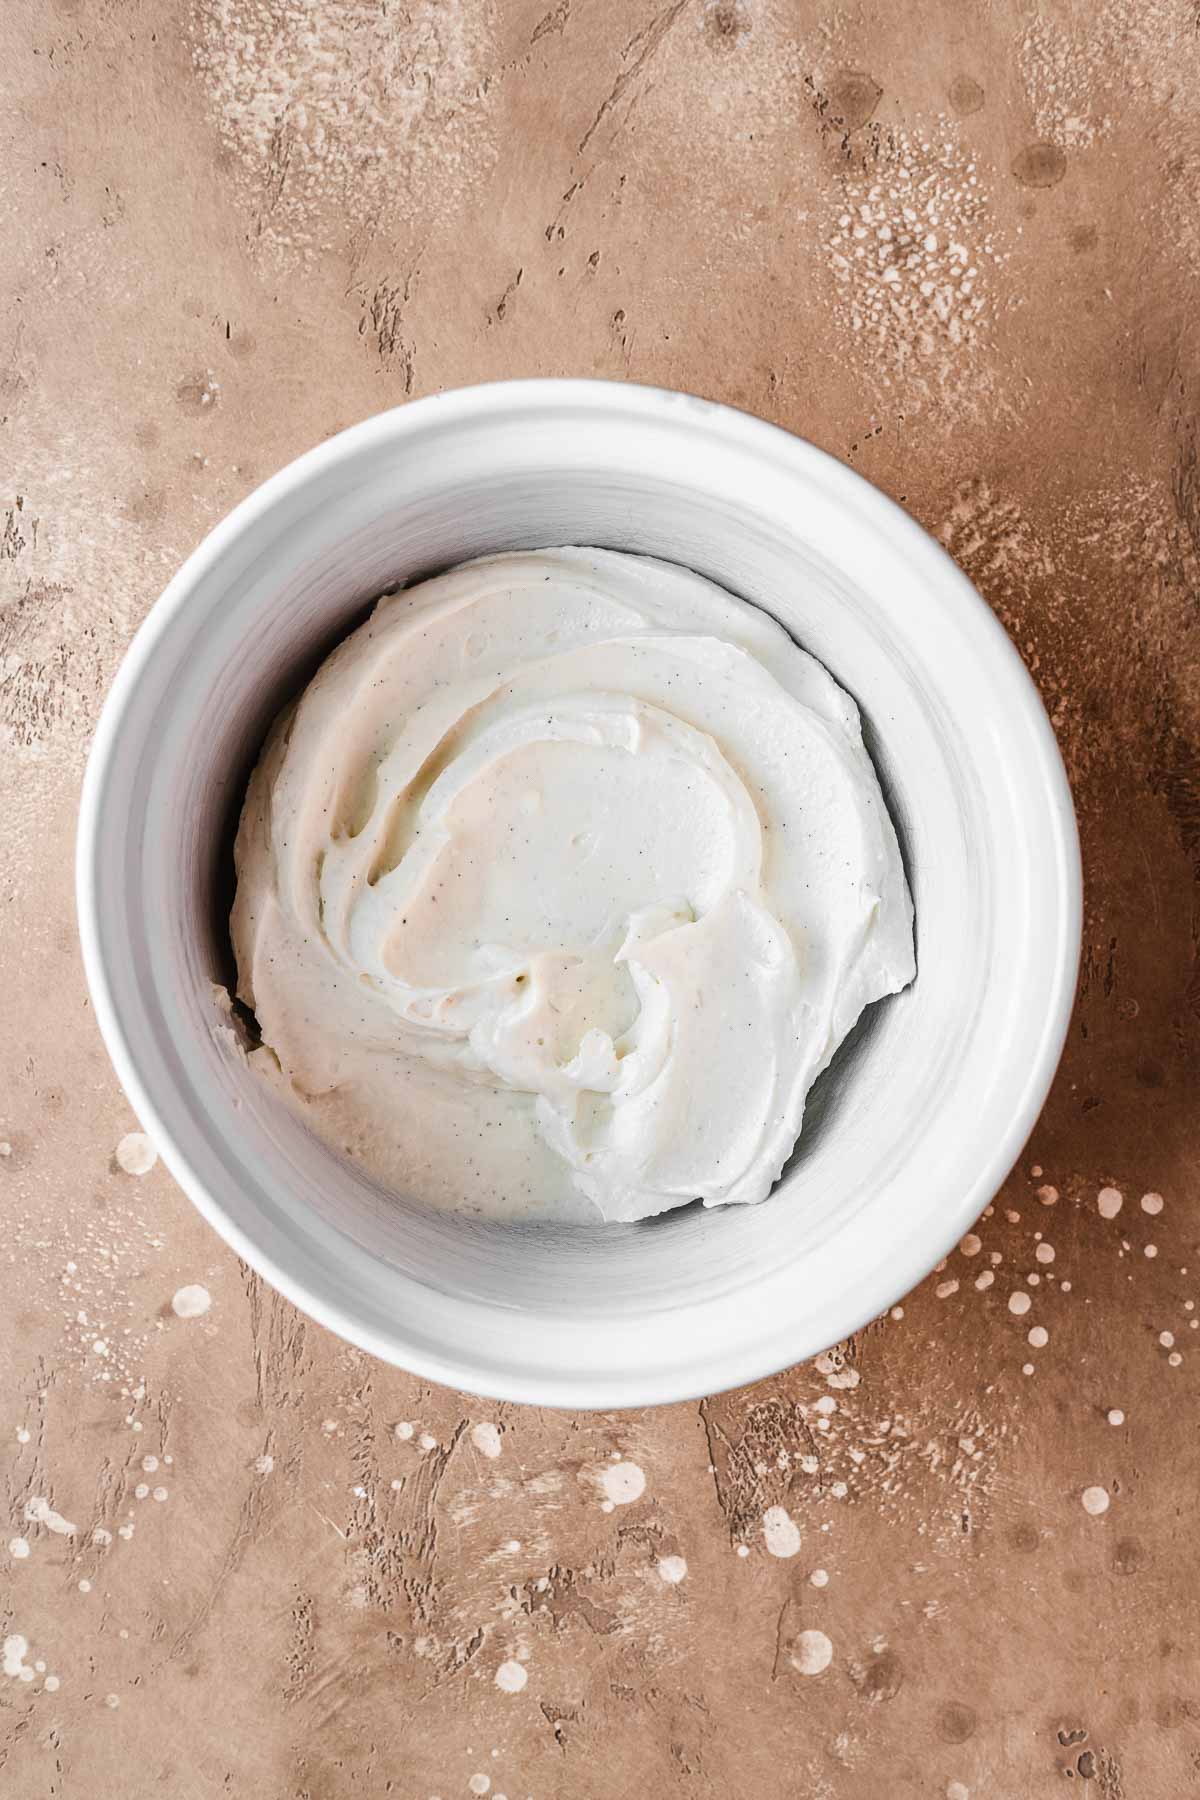 A bowl of mascarpone cream made with mascarpone and greek yogurt.